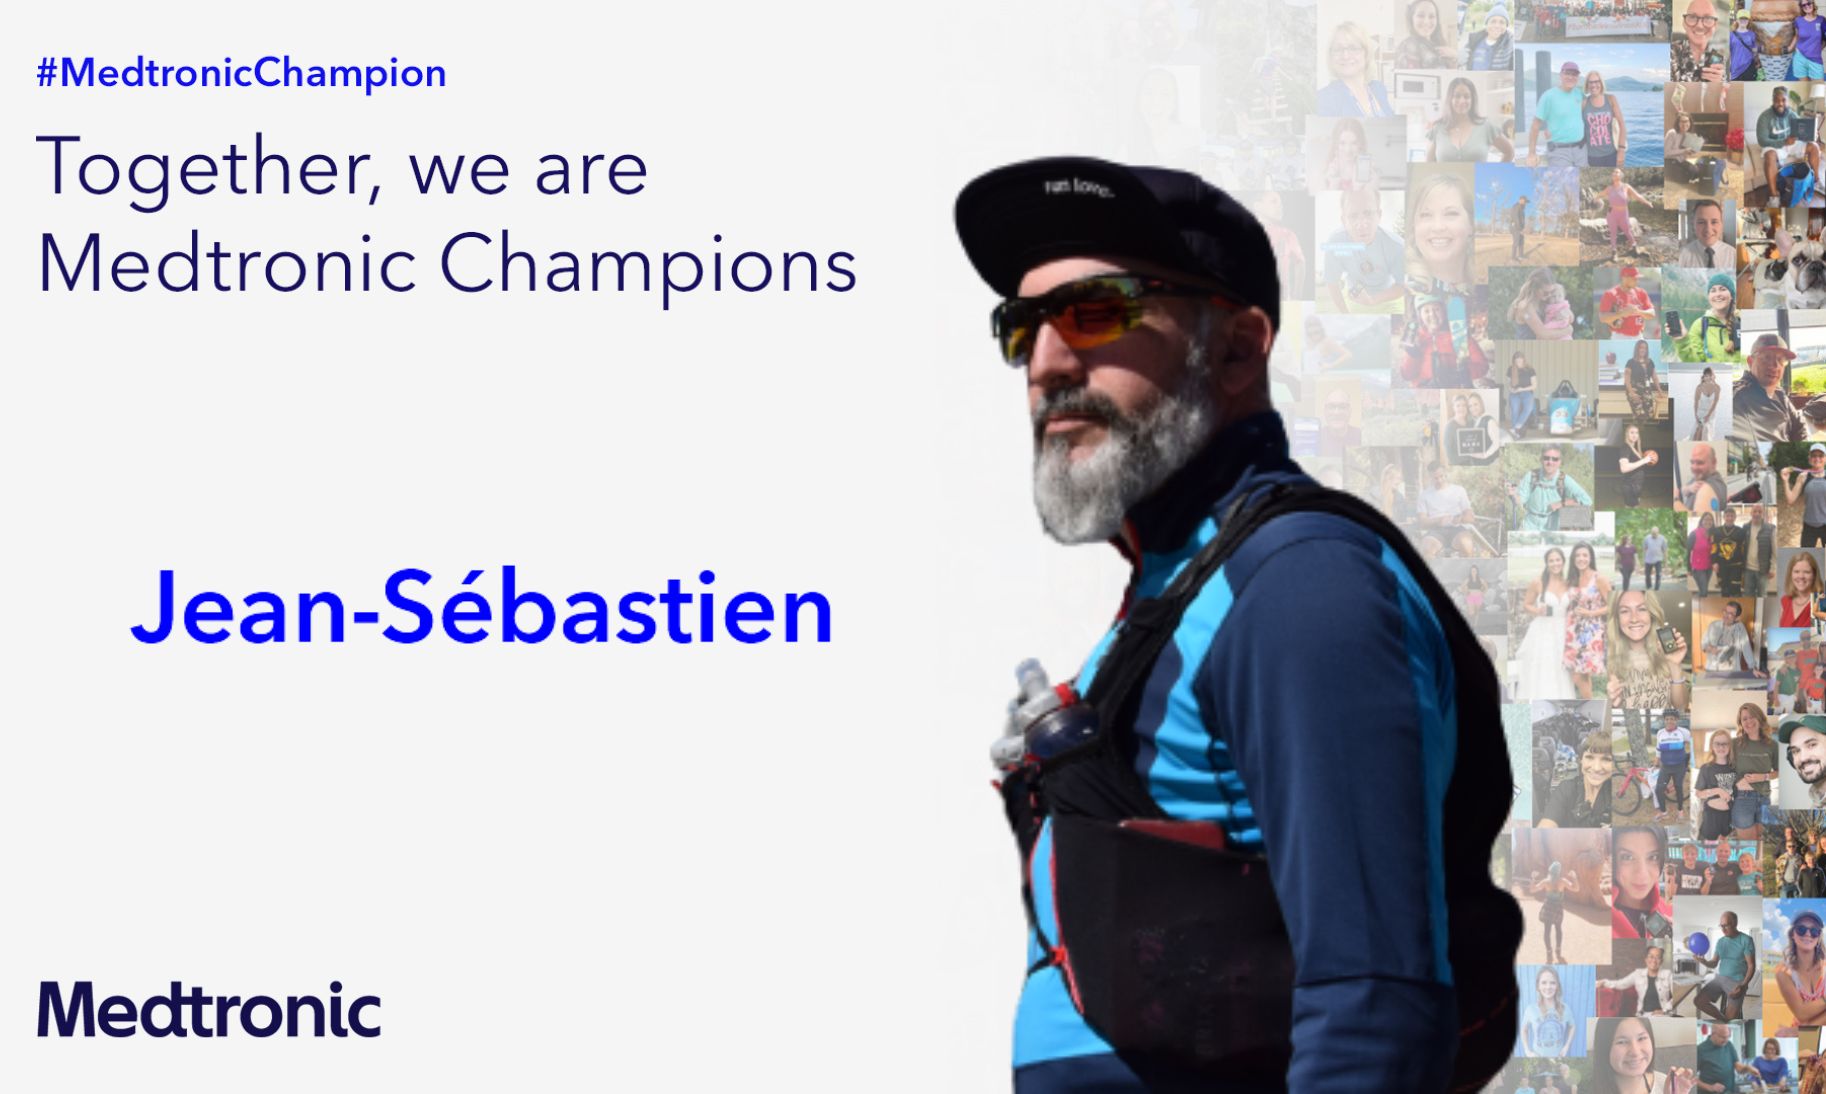 Medtronic Champion Jean-Sebastien